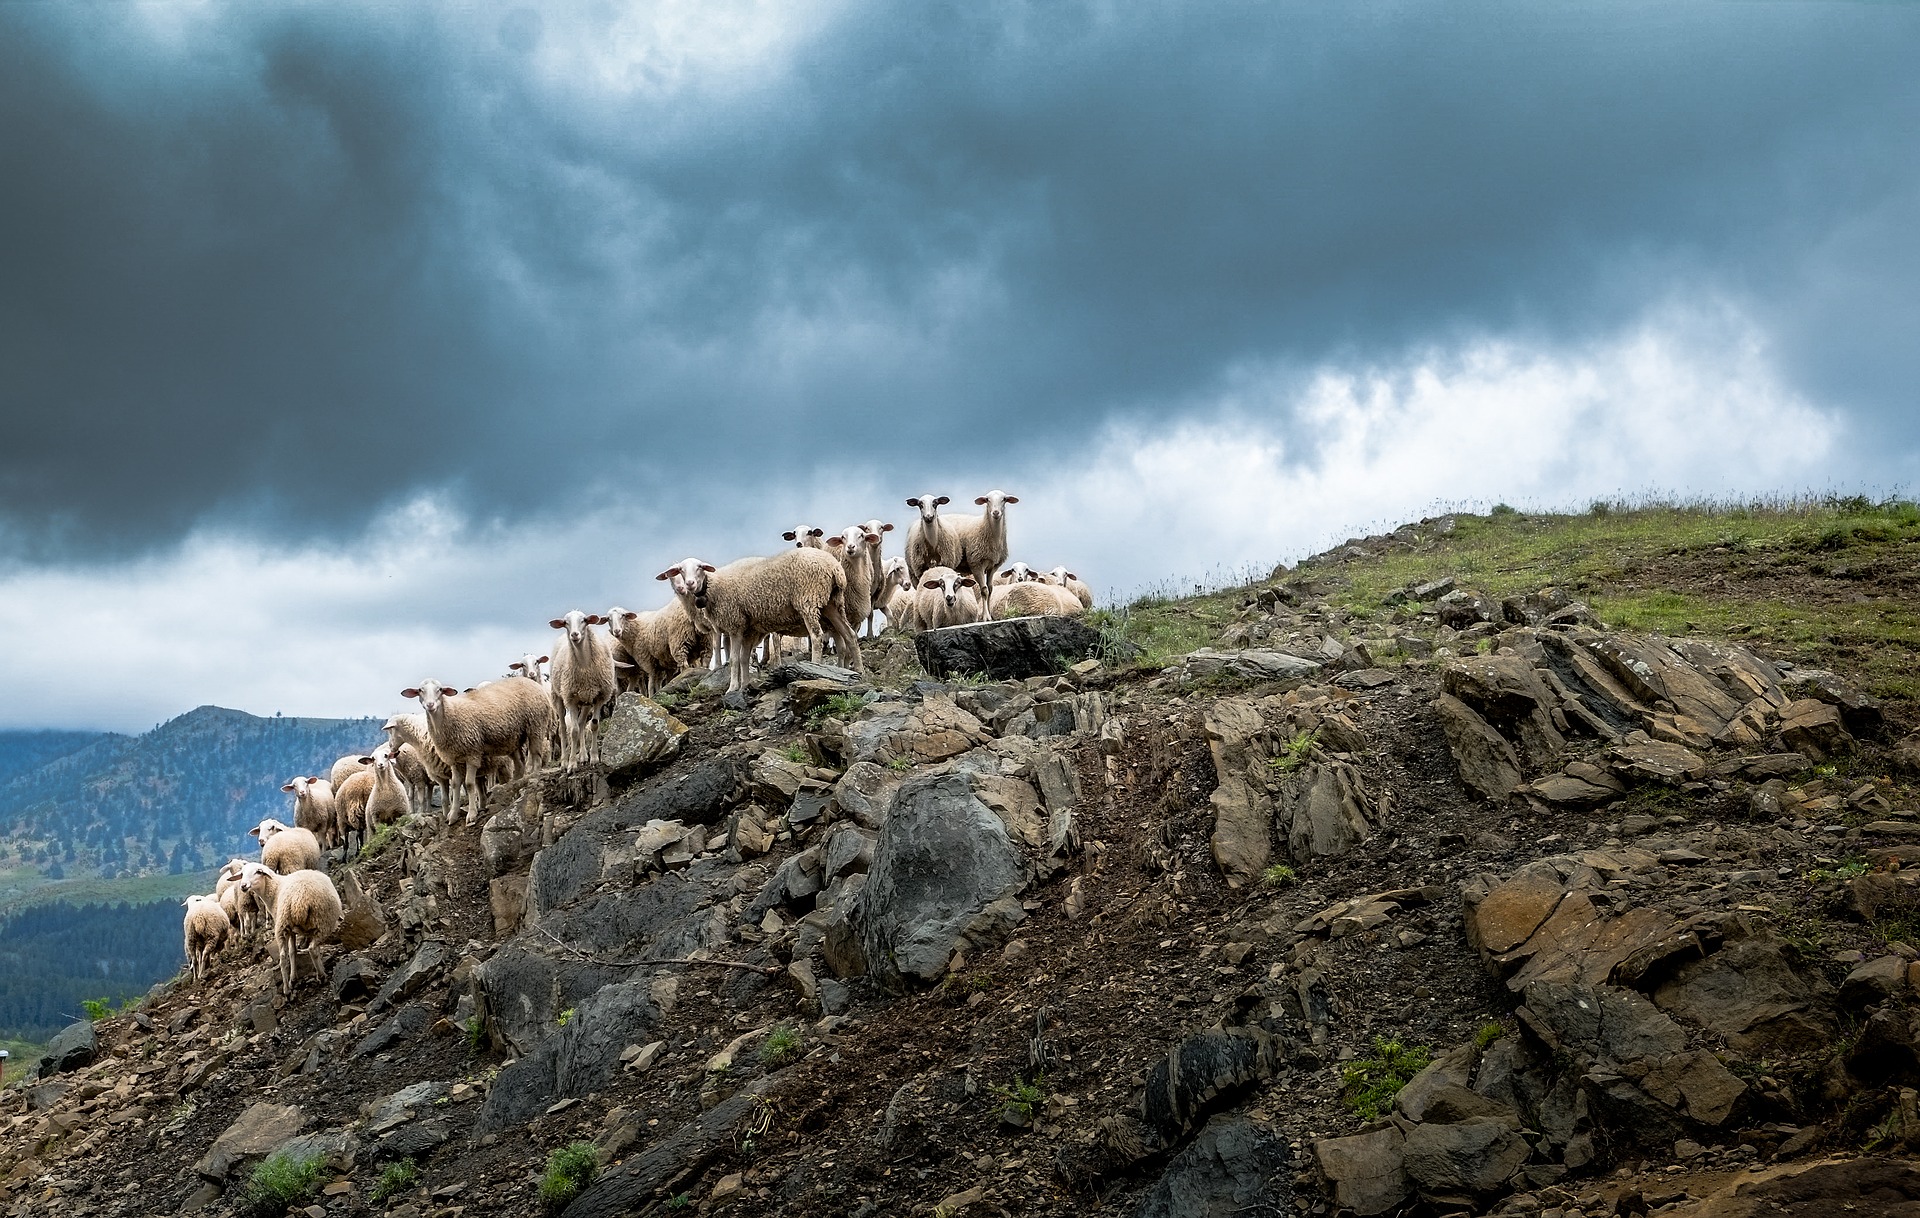 Sheep on a Hill in Greece by Antonios Ntoumas